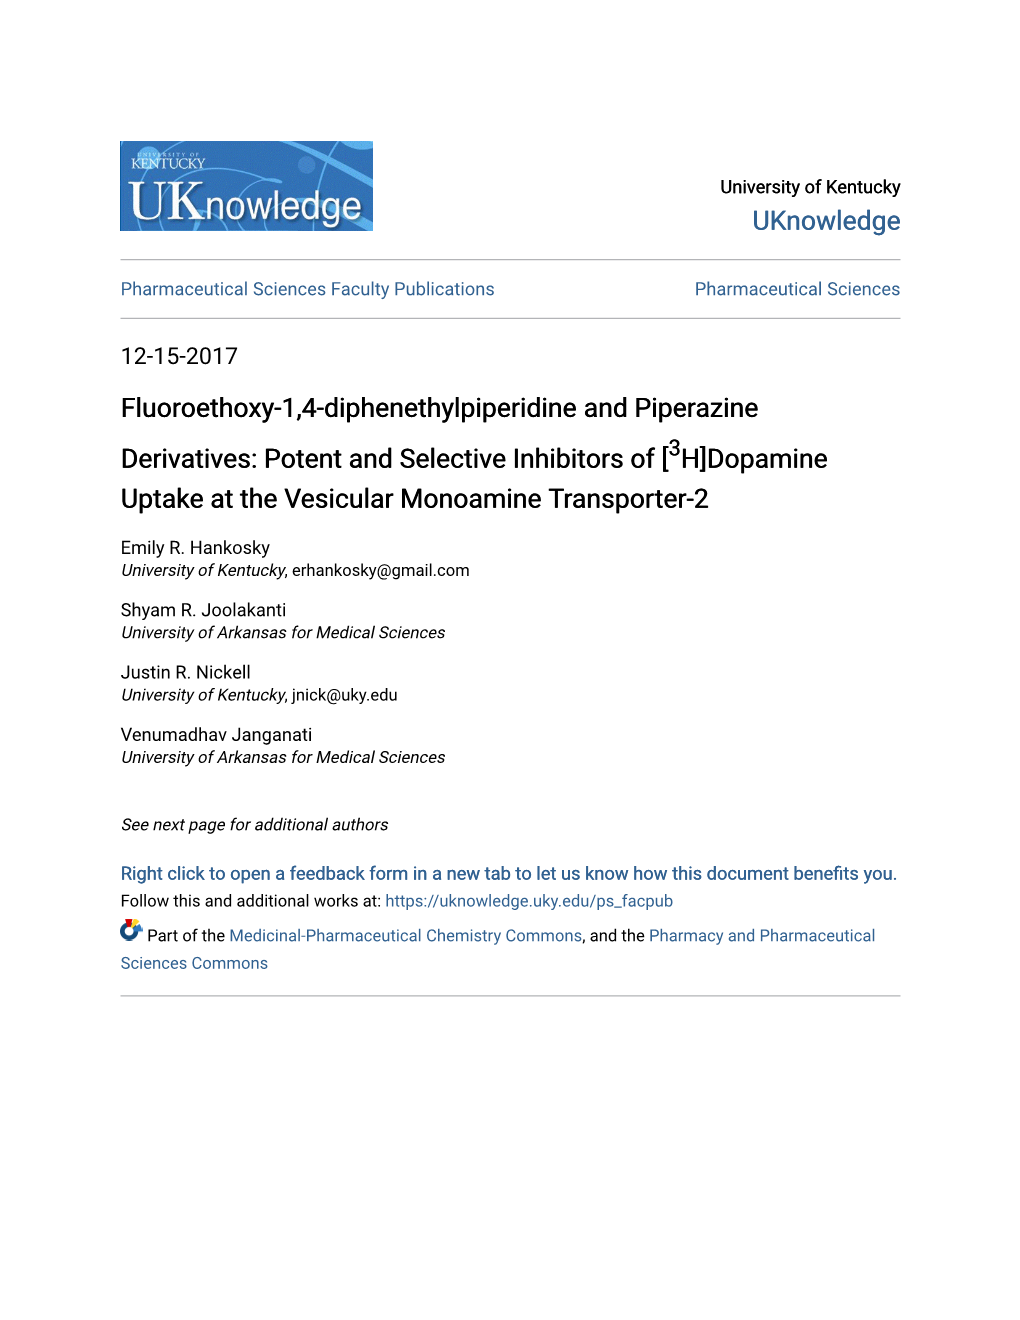 Potent and Selective Inhibitors of [3H]Dopamine Uptake at the Vesicular Monoamine Transporter-2